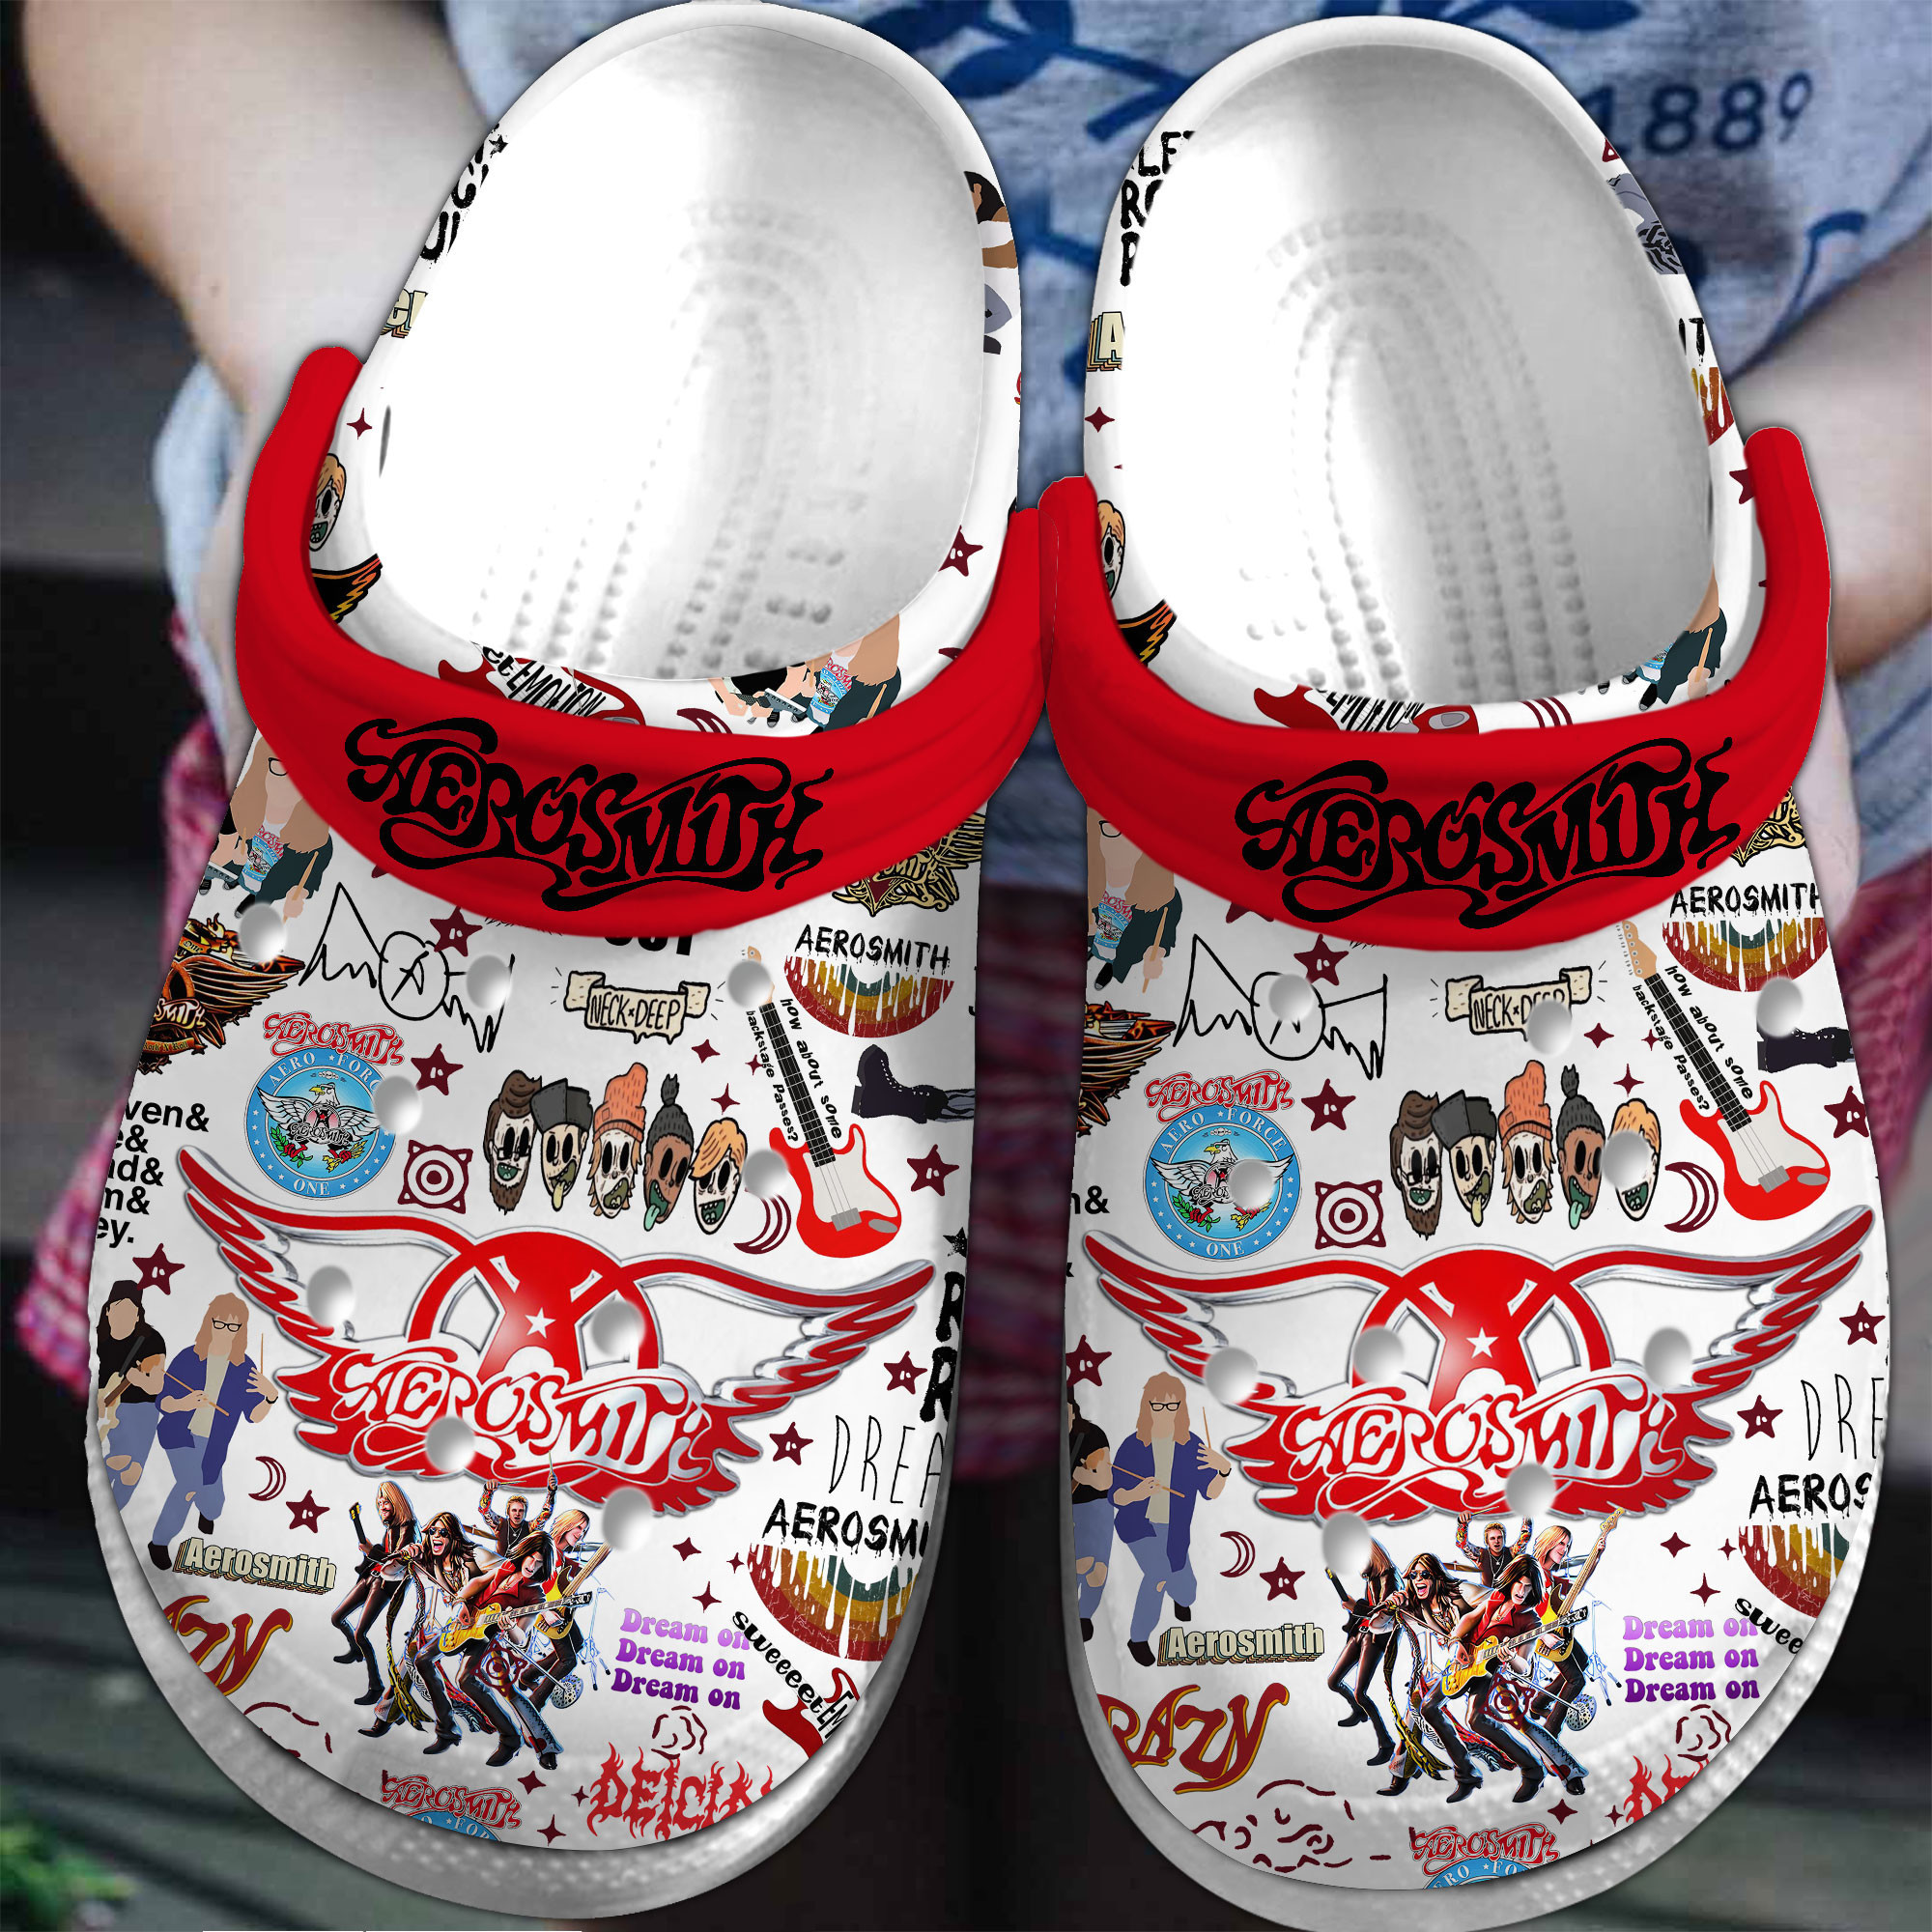 Aerosmith Music Crocs Crocband Clogs Shoes Comfortable For Men Women and Kids 3